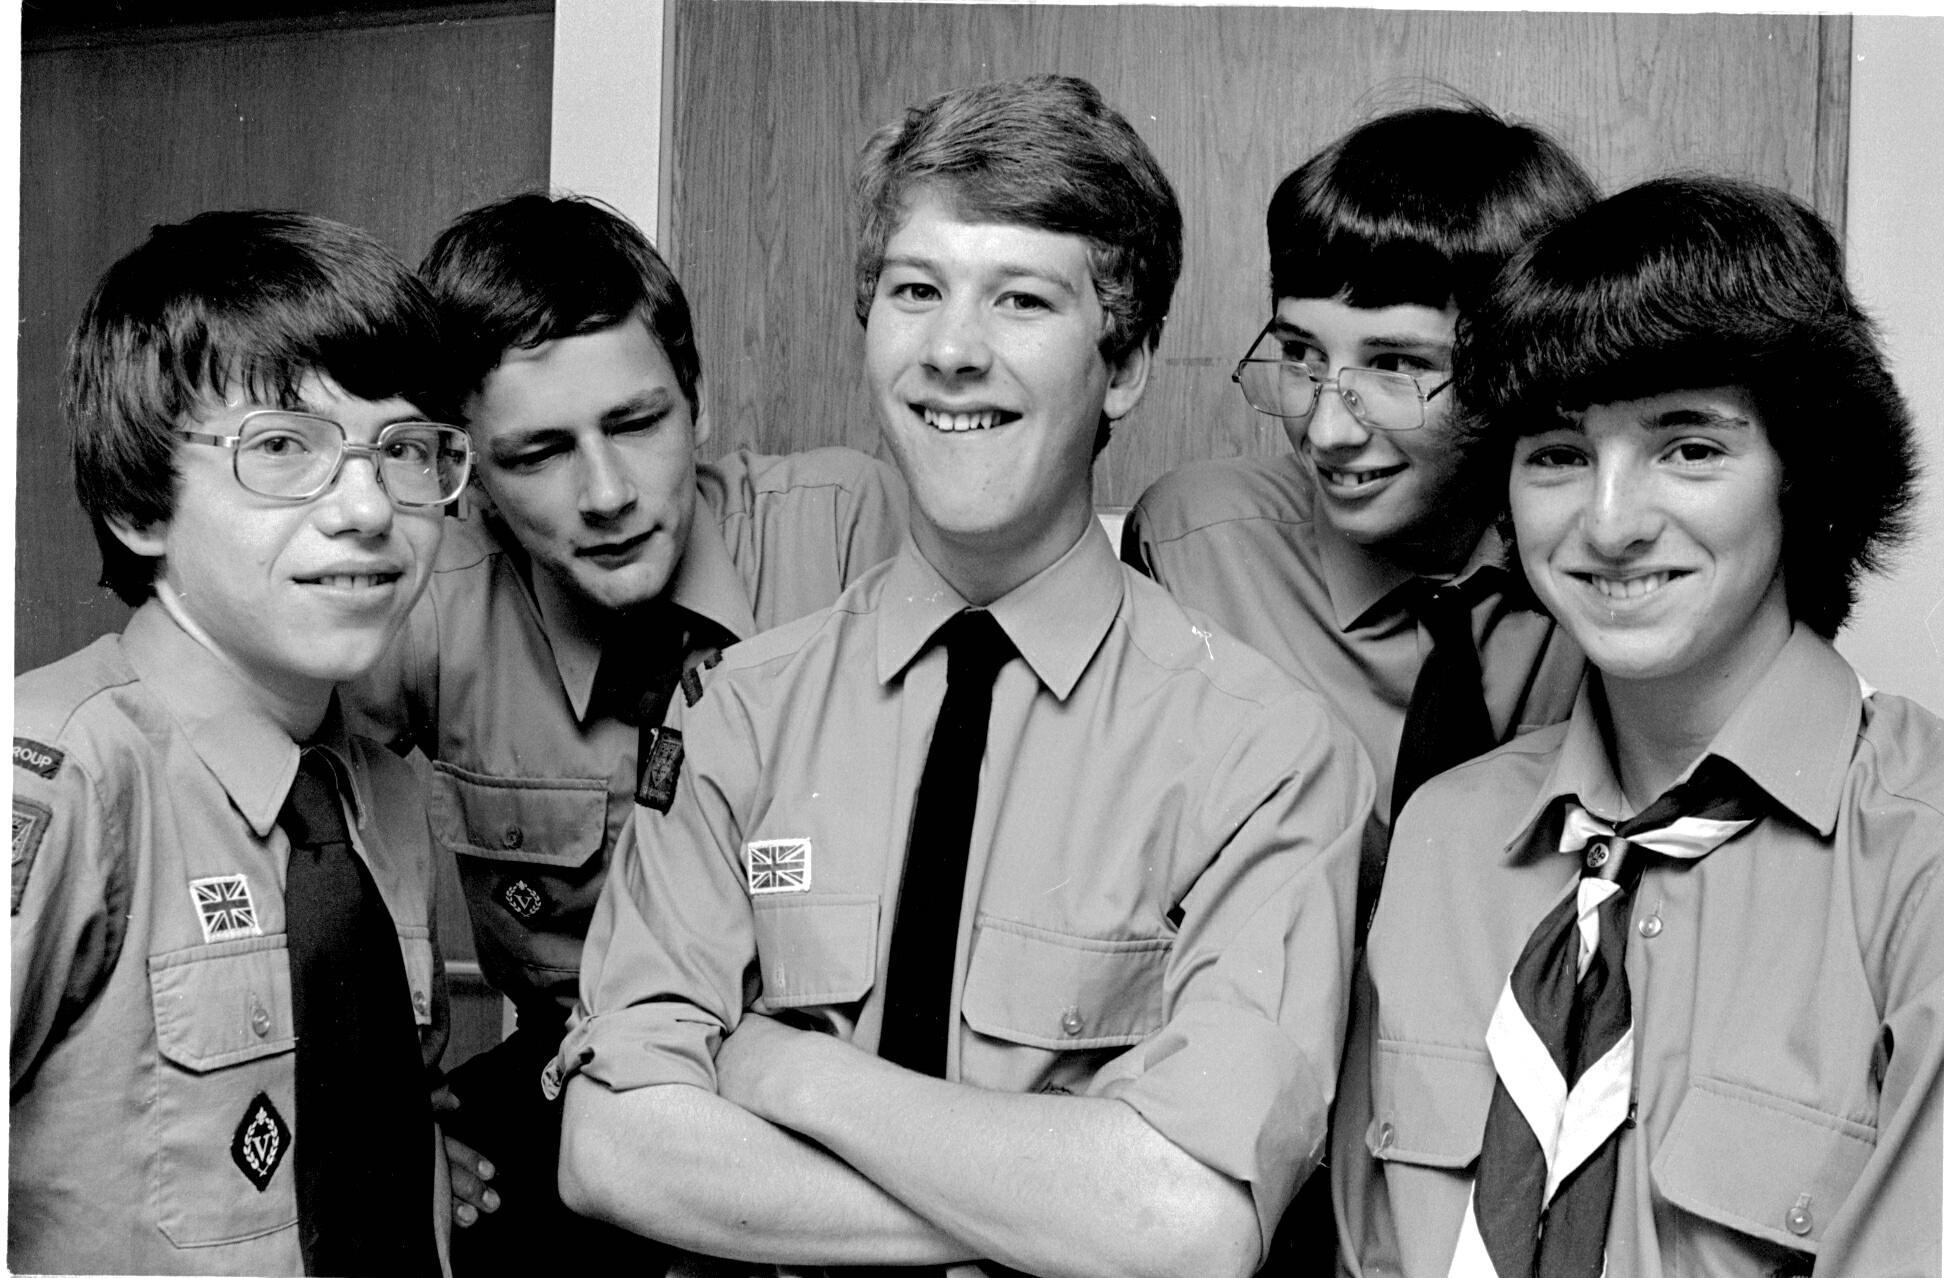 Members of Oswestry Venture Scouts in 1980.